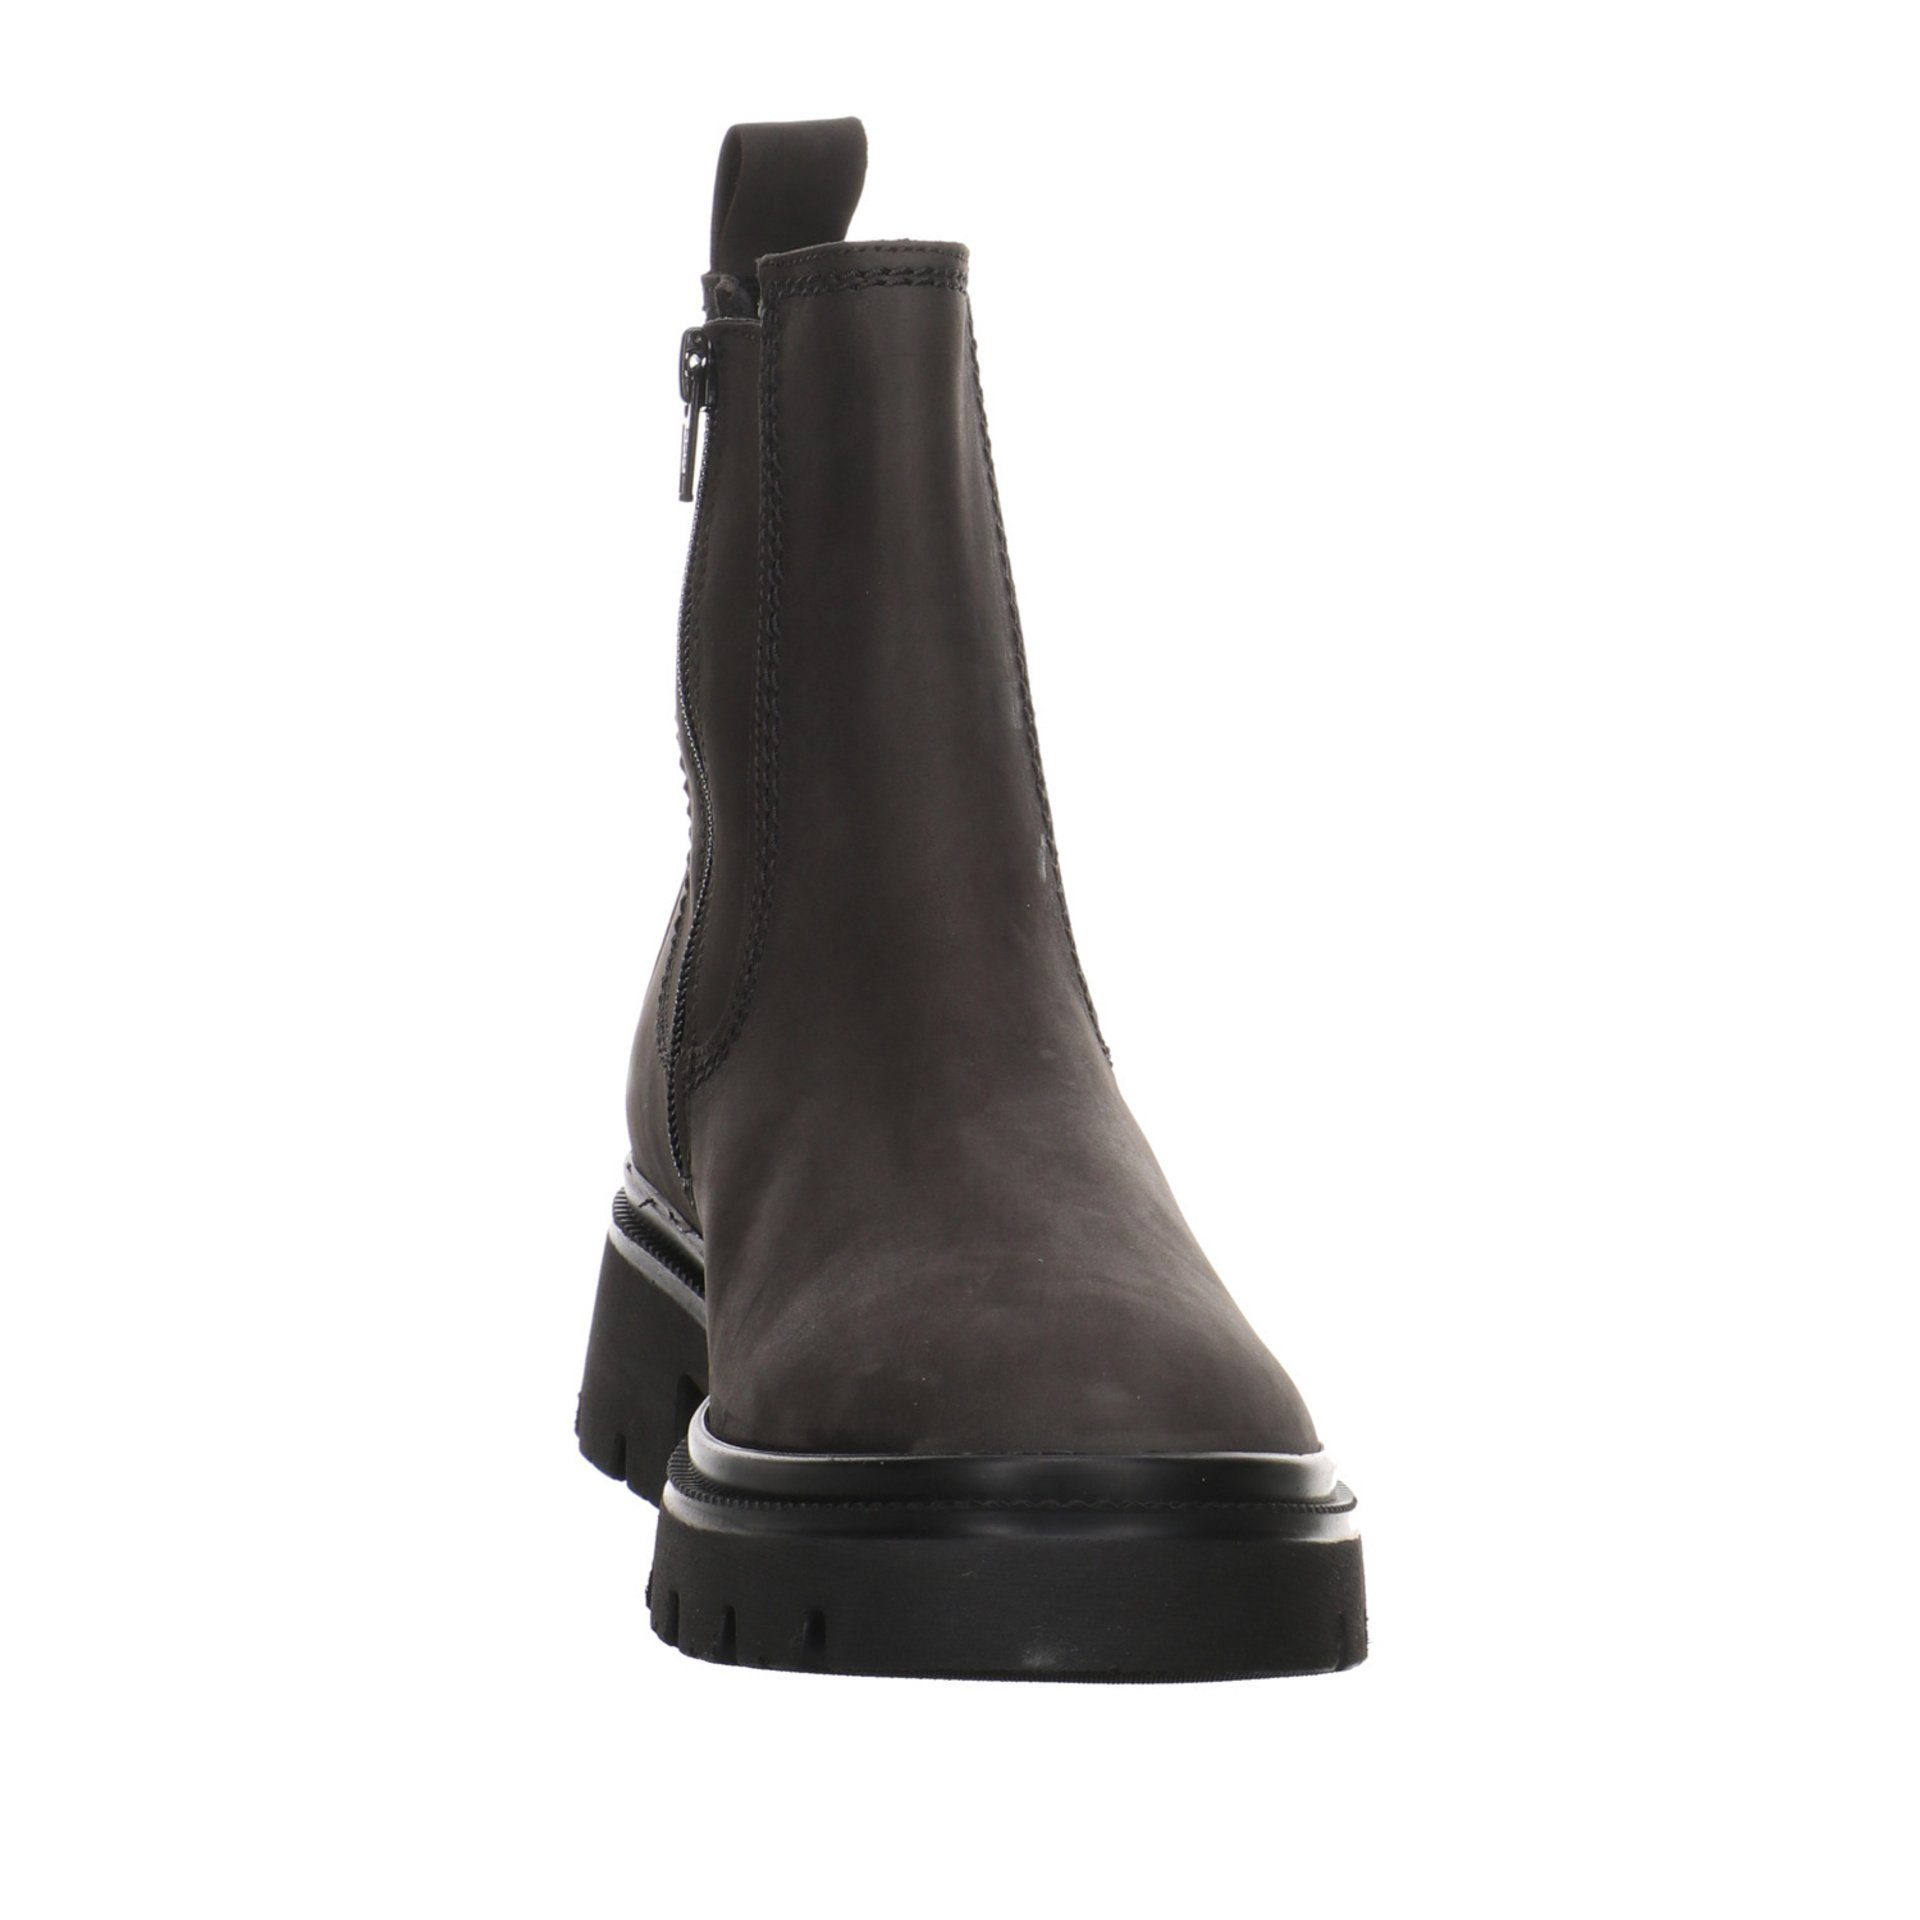 Grau Chelsea Damen Boots Nubukleder Stiefelette Stiefeletten (pepper/schwarz) Gabor Schuhe